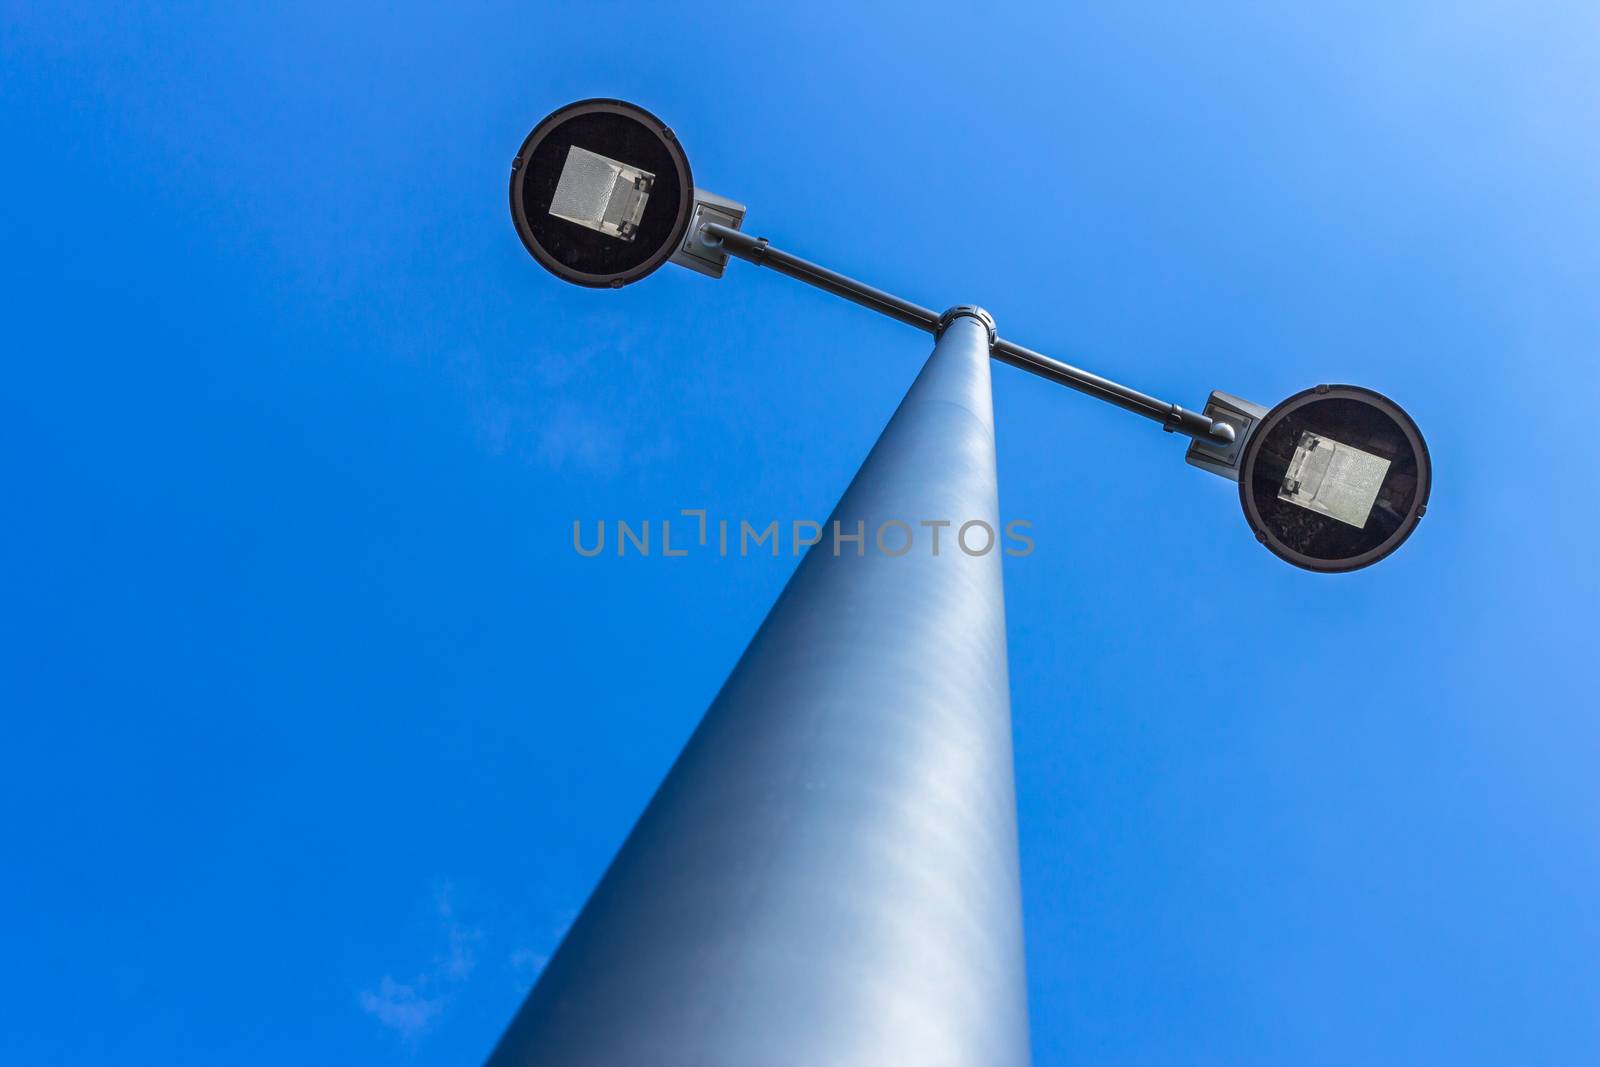 Double modern street light lamp on a blue sky background. Bottom view.